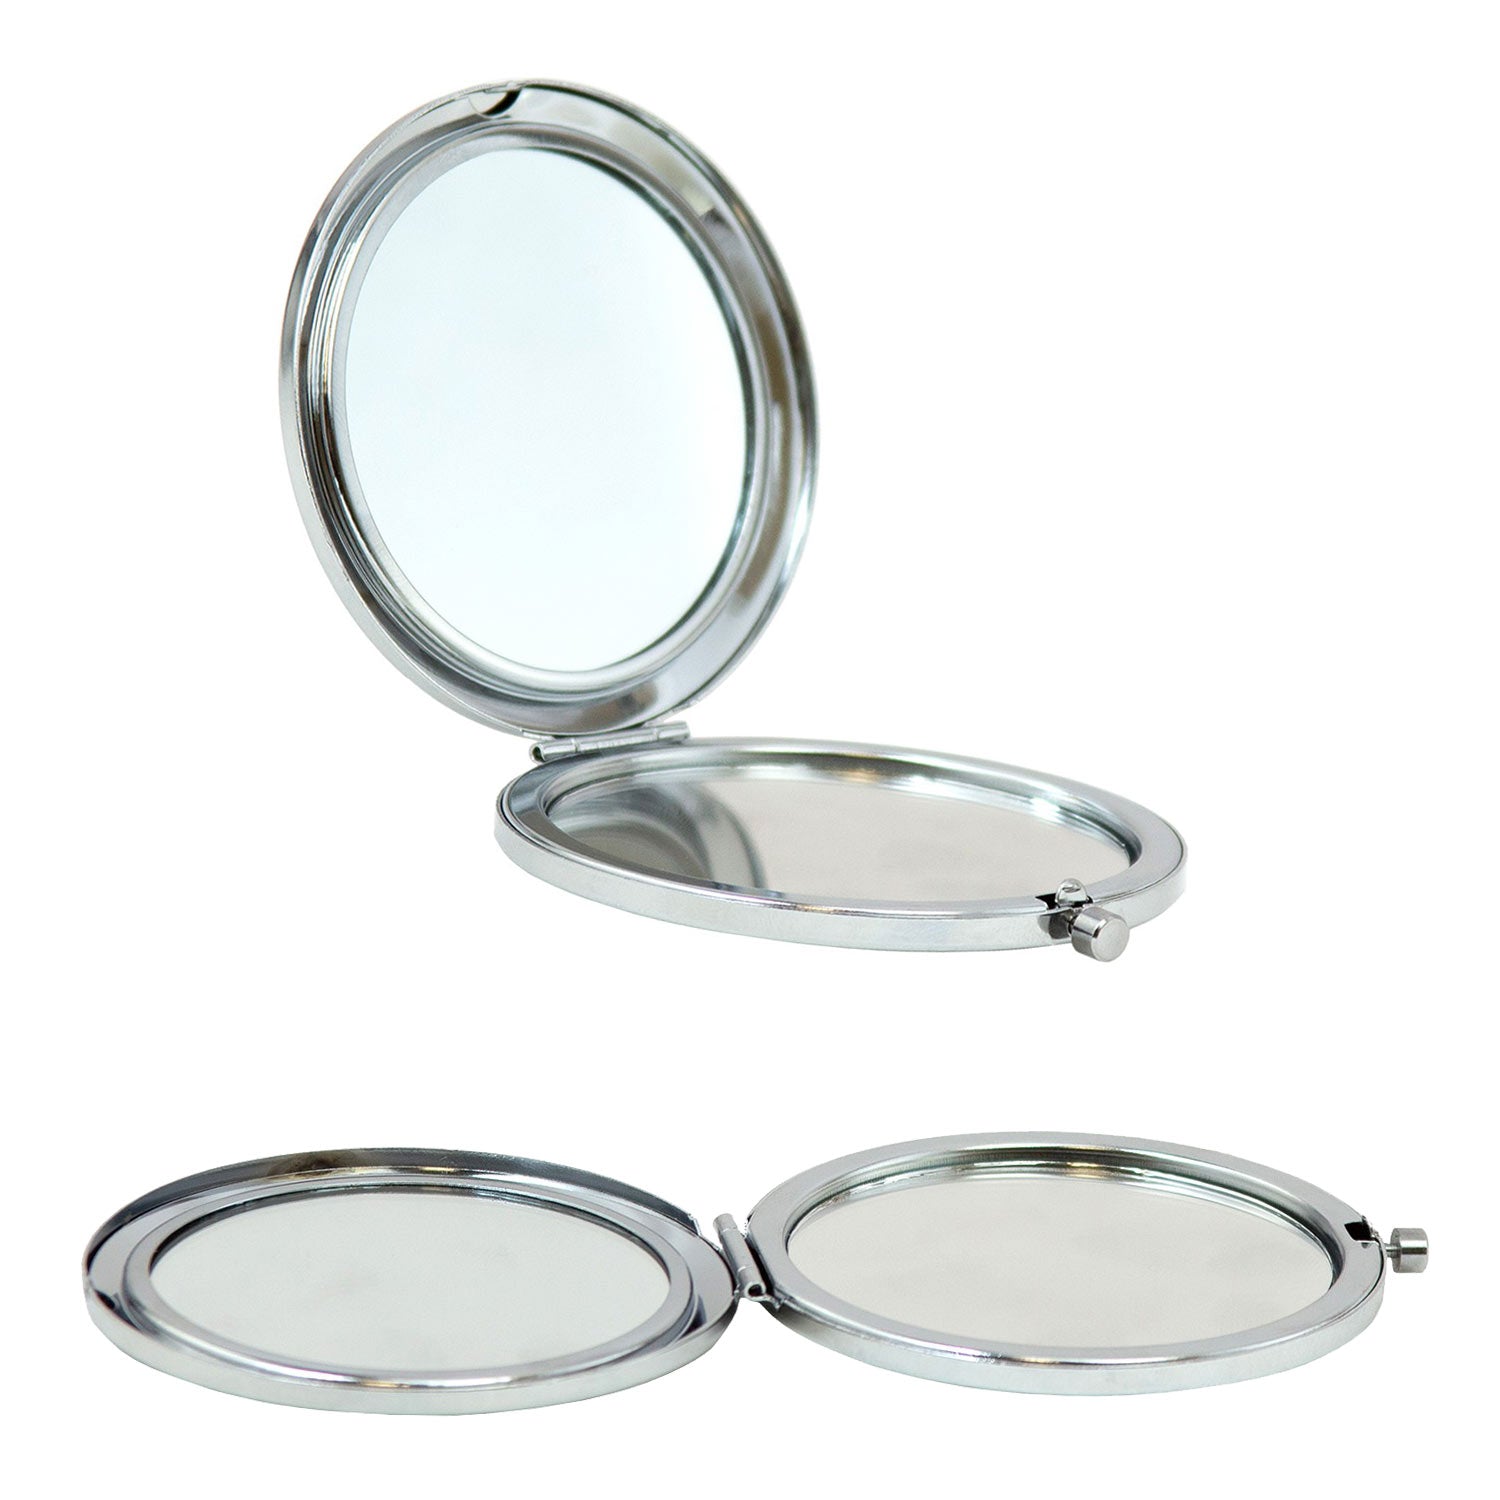 CLEARANCE COSMETIC MIRRORS ALPACA PRINTS (CASE OF 60 - $1.00 / PIECE)  Wholesale Round Cosmetic Mirrors in Alpaca Prints SKU: 801-ALPACA-60